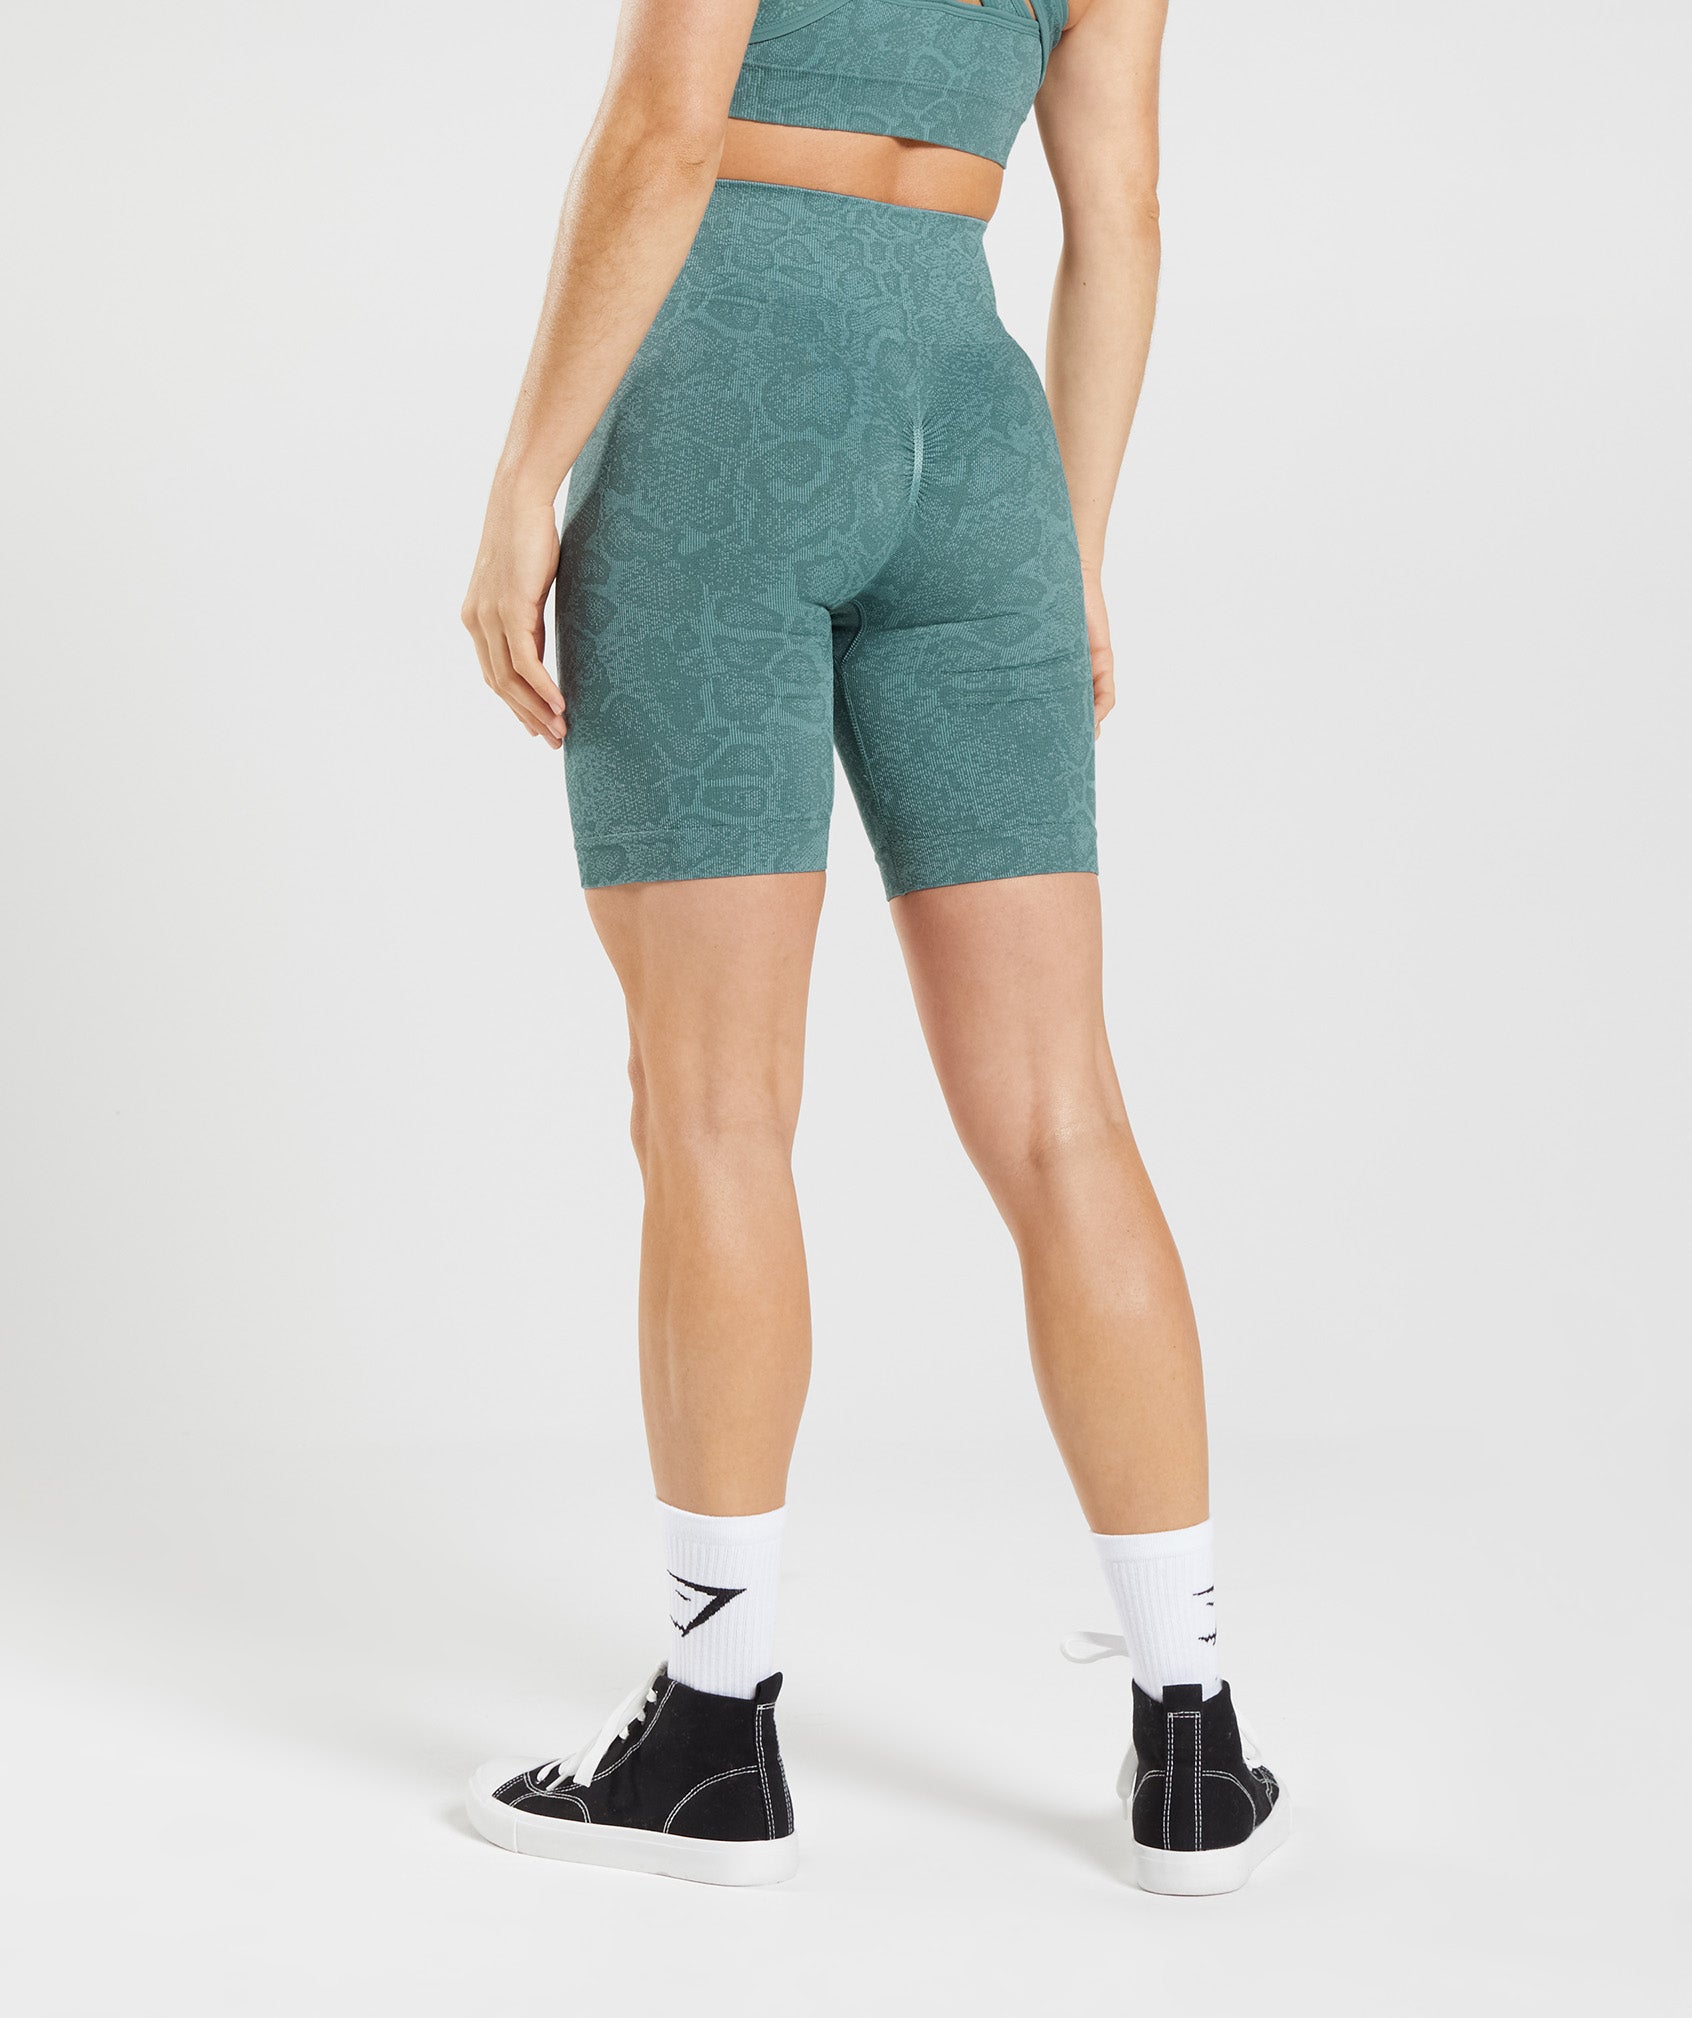 Gymshark Flex Shorts - Jewel Green/White Marl/Cornflower Blue